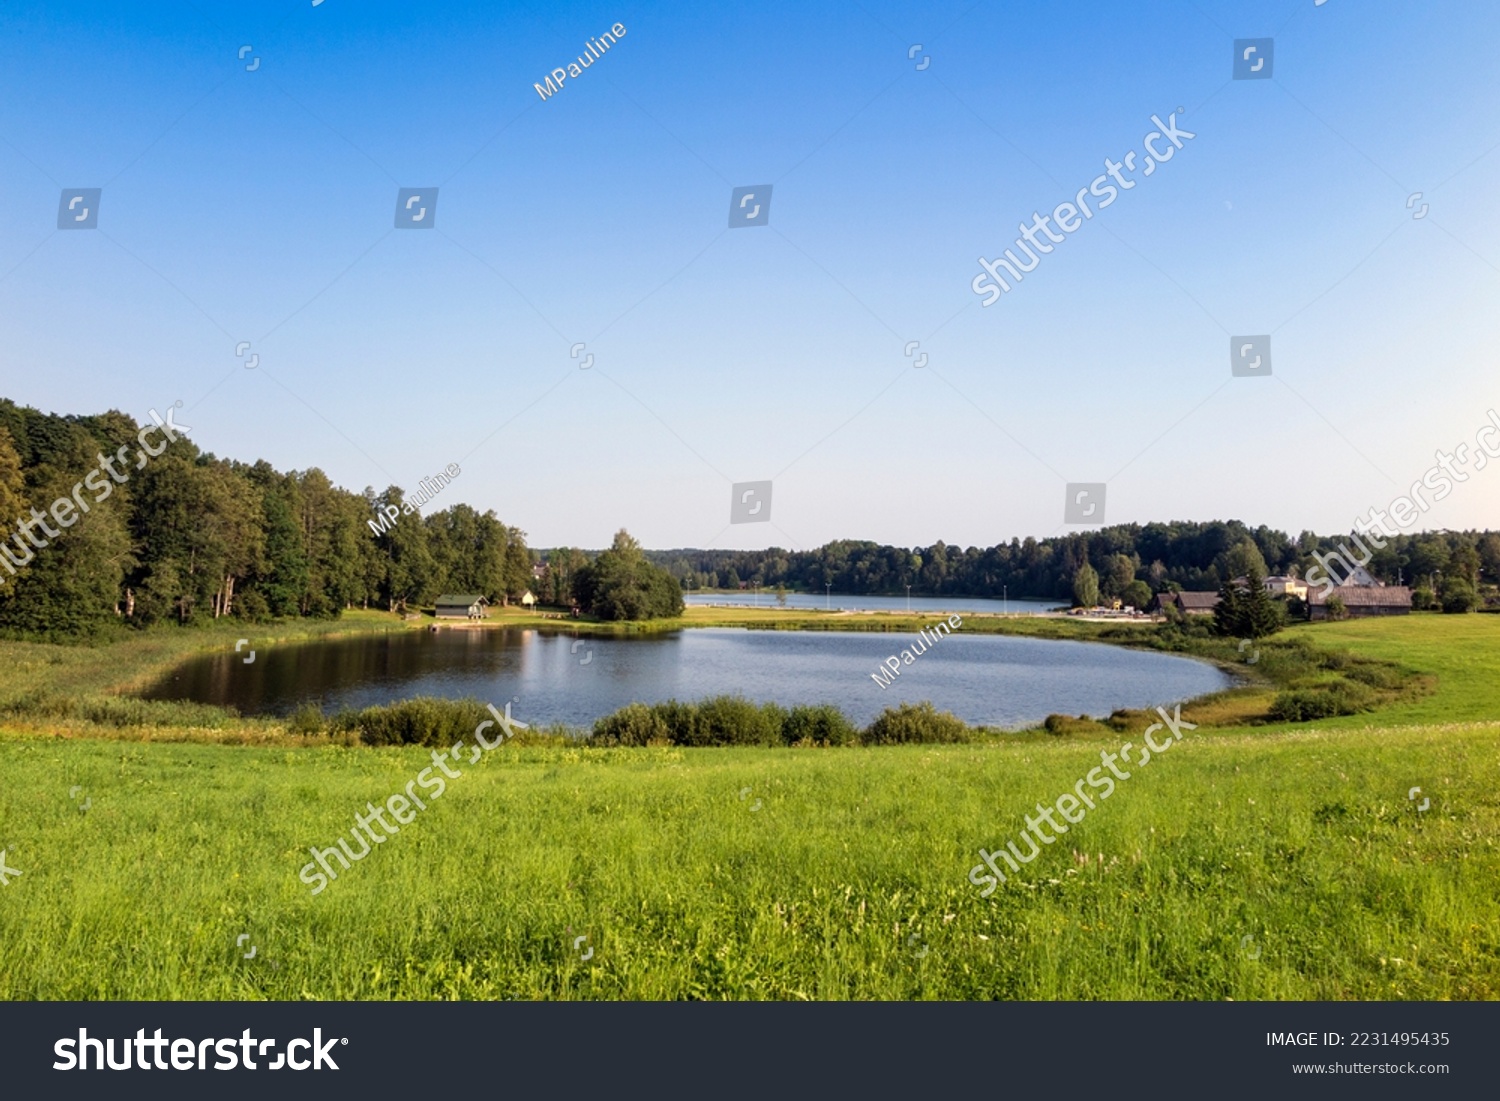 Lake Kaussjärv in Võru county, Estonia. Small lake, green grass. #2231495435